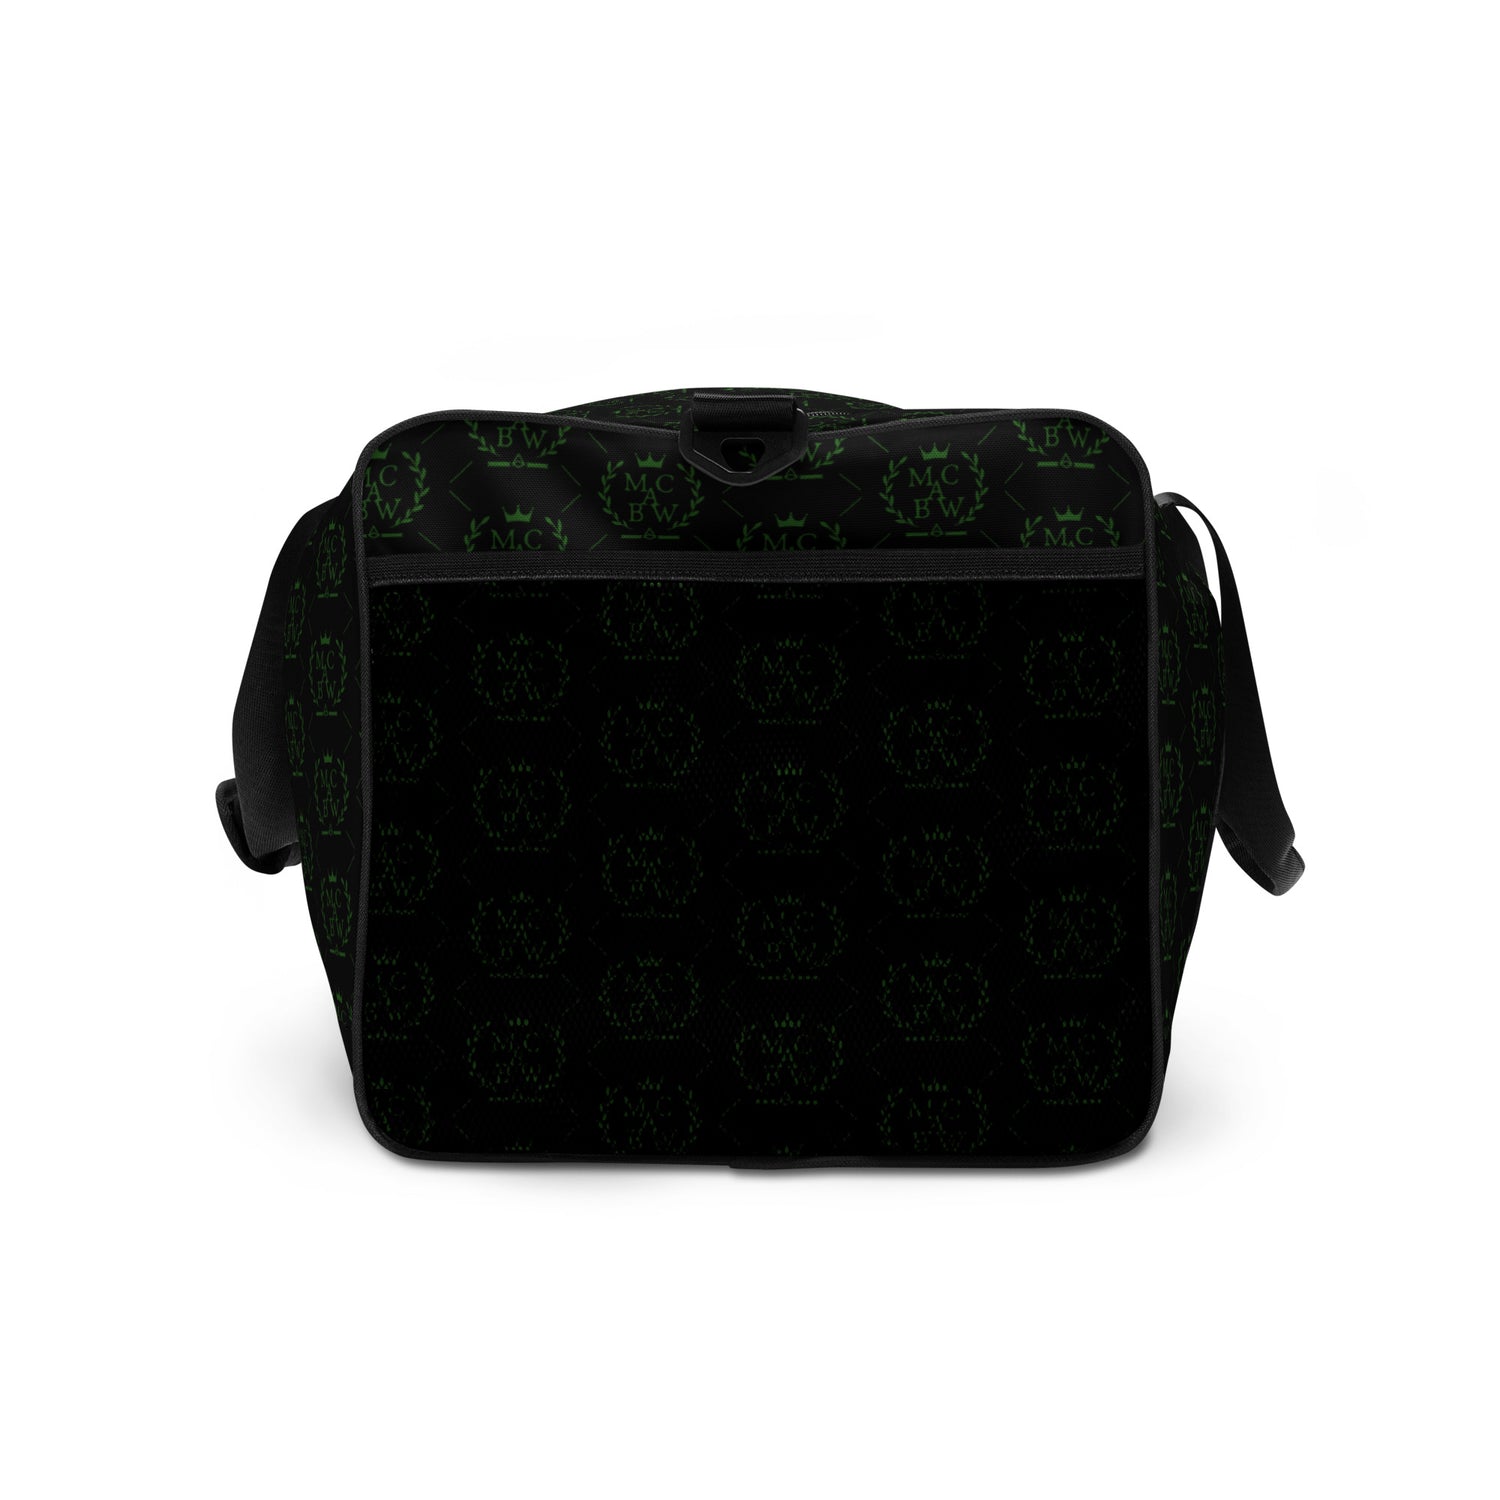 Black/Green Duffle Bag